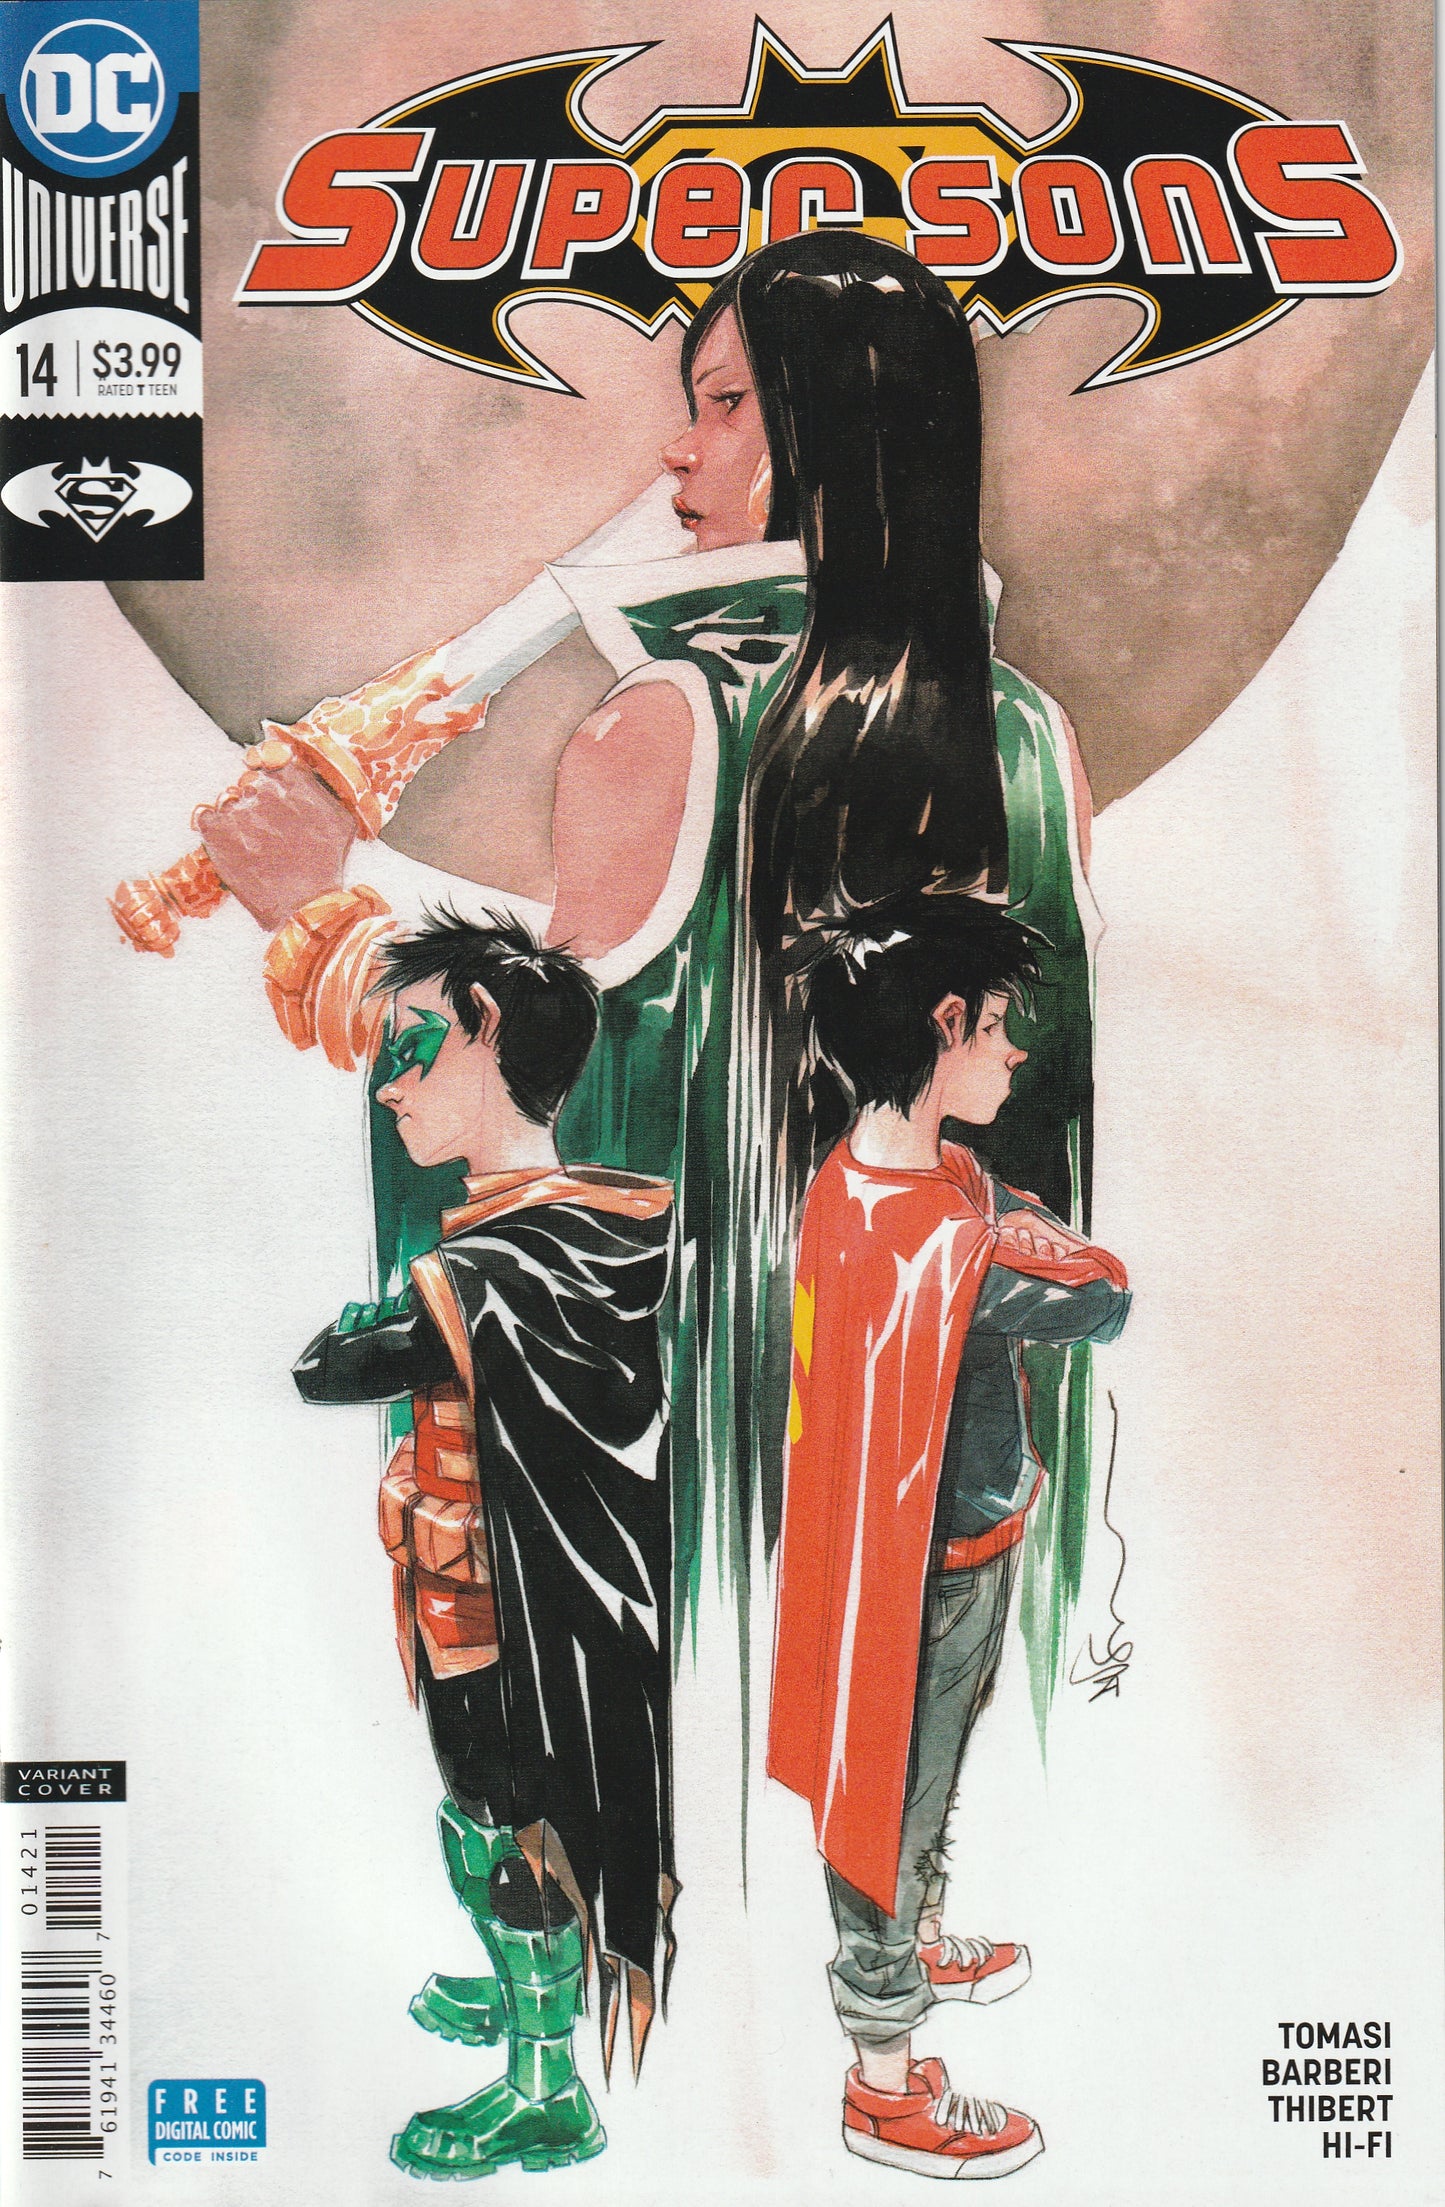 Super Sons #14 (2018) - Dustin Nguyen Variant Cover